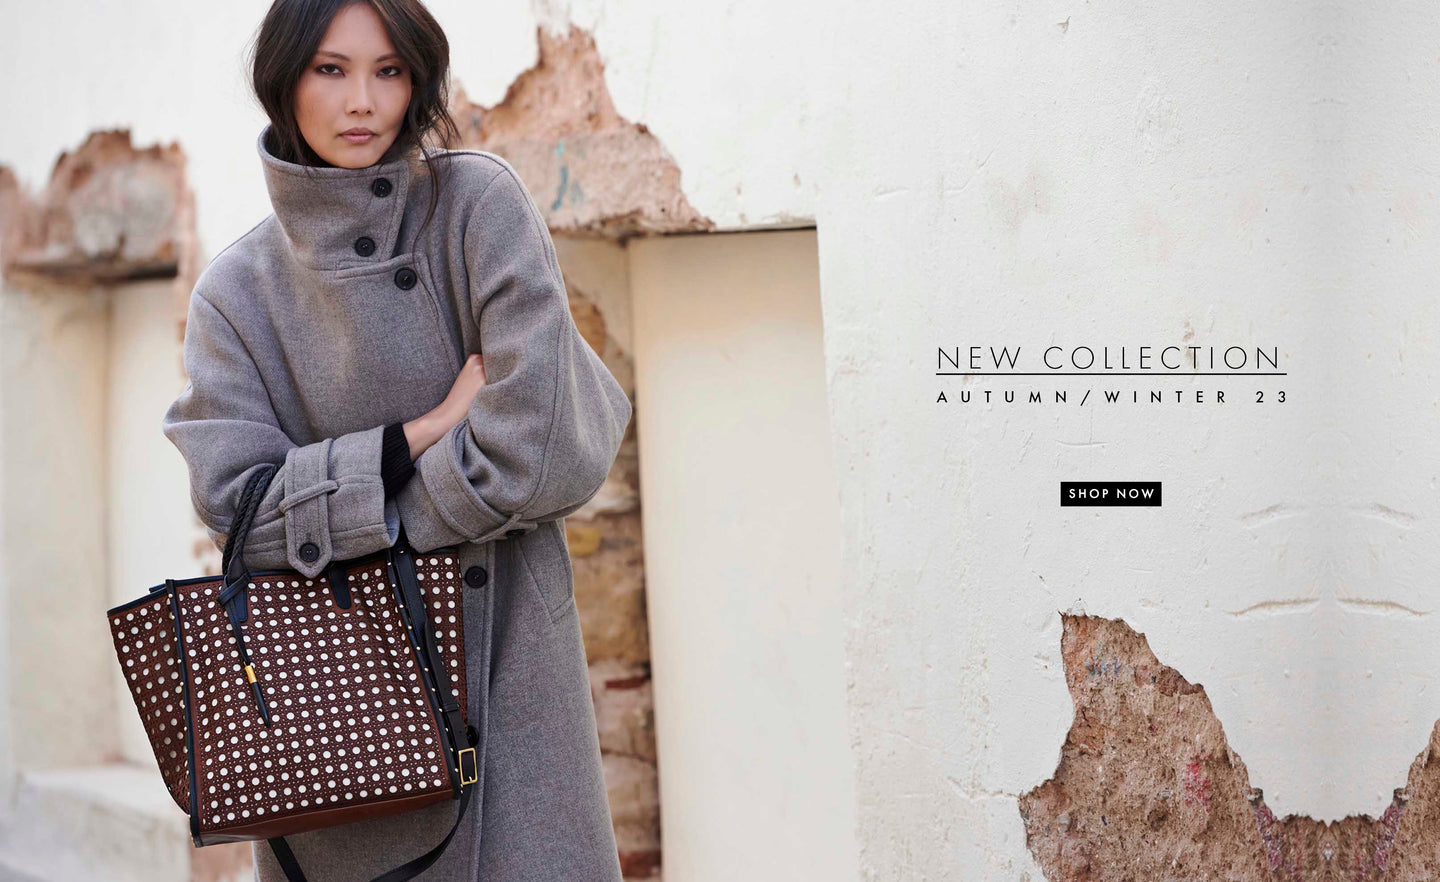 Kempton & Co. Mini Mia Leather Rattan Handbag